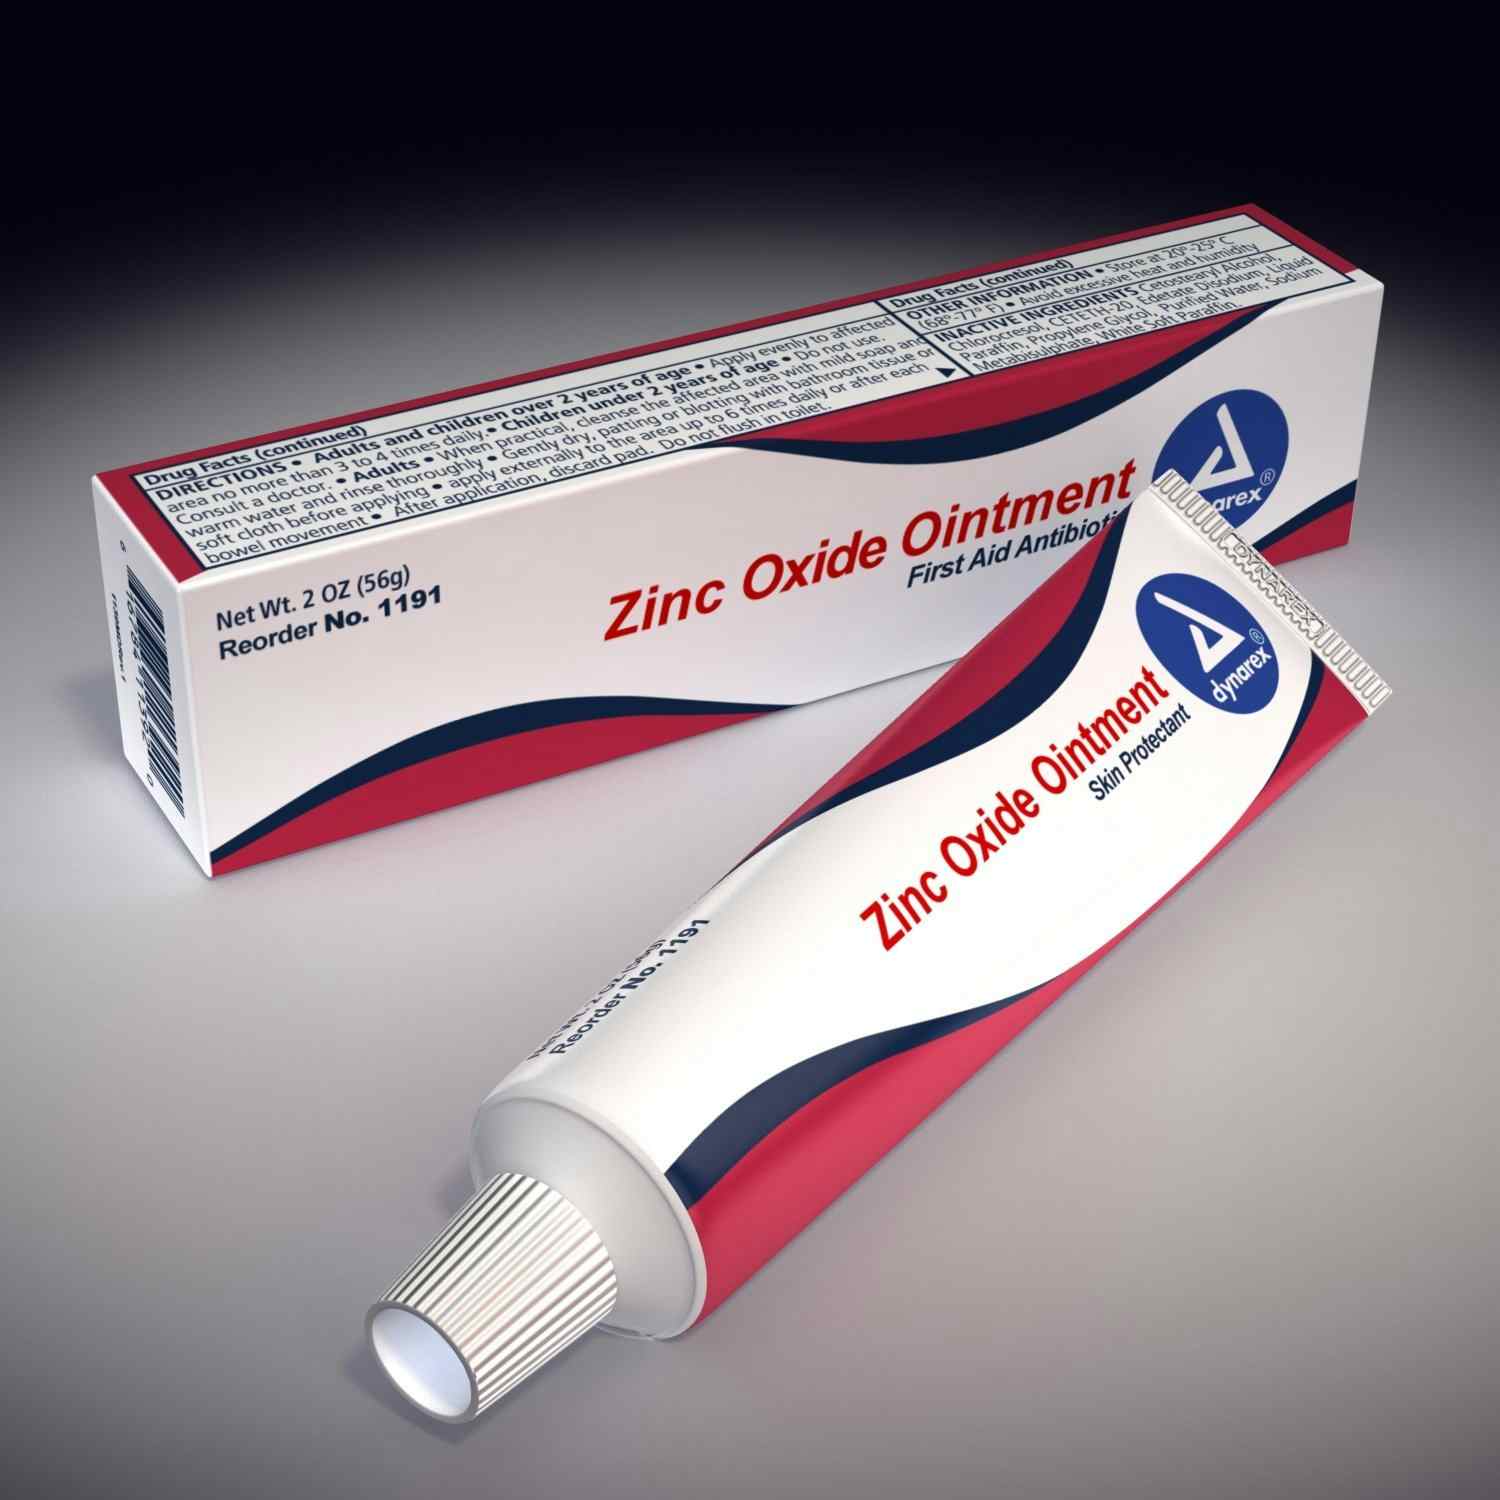 Dynarex Zinc Oxide Ointment Skin Protectant, 2 oz.